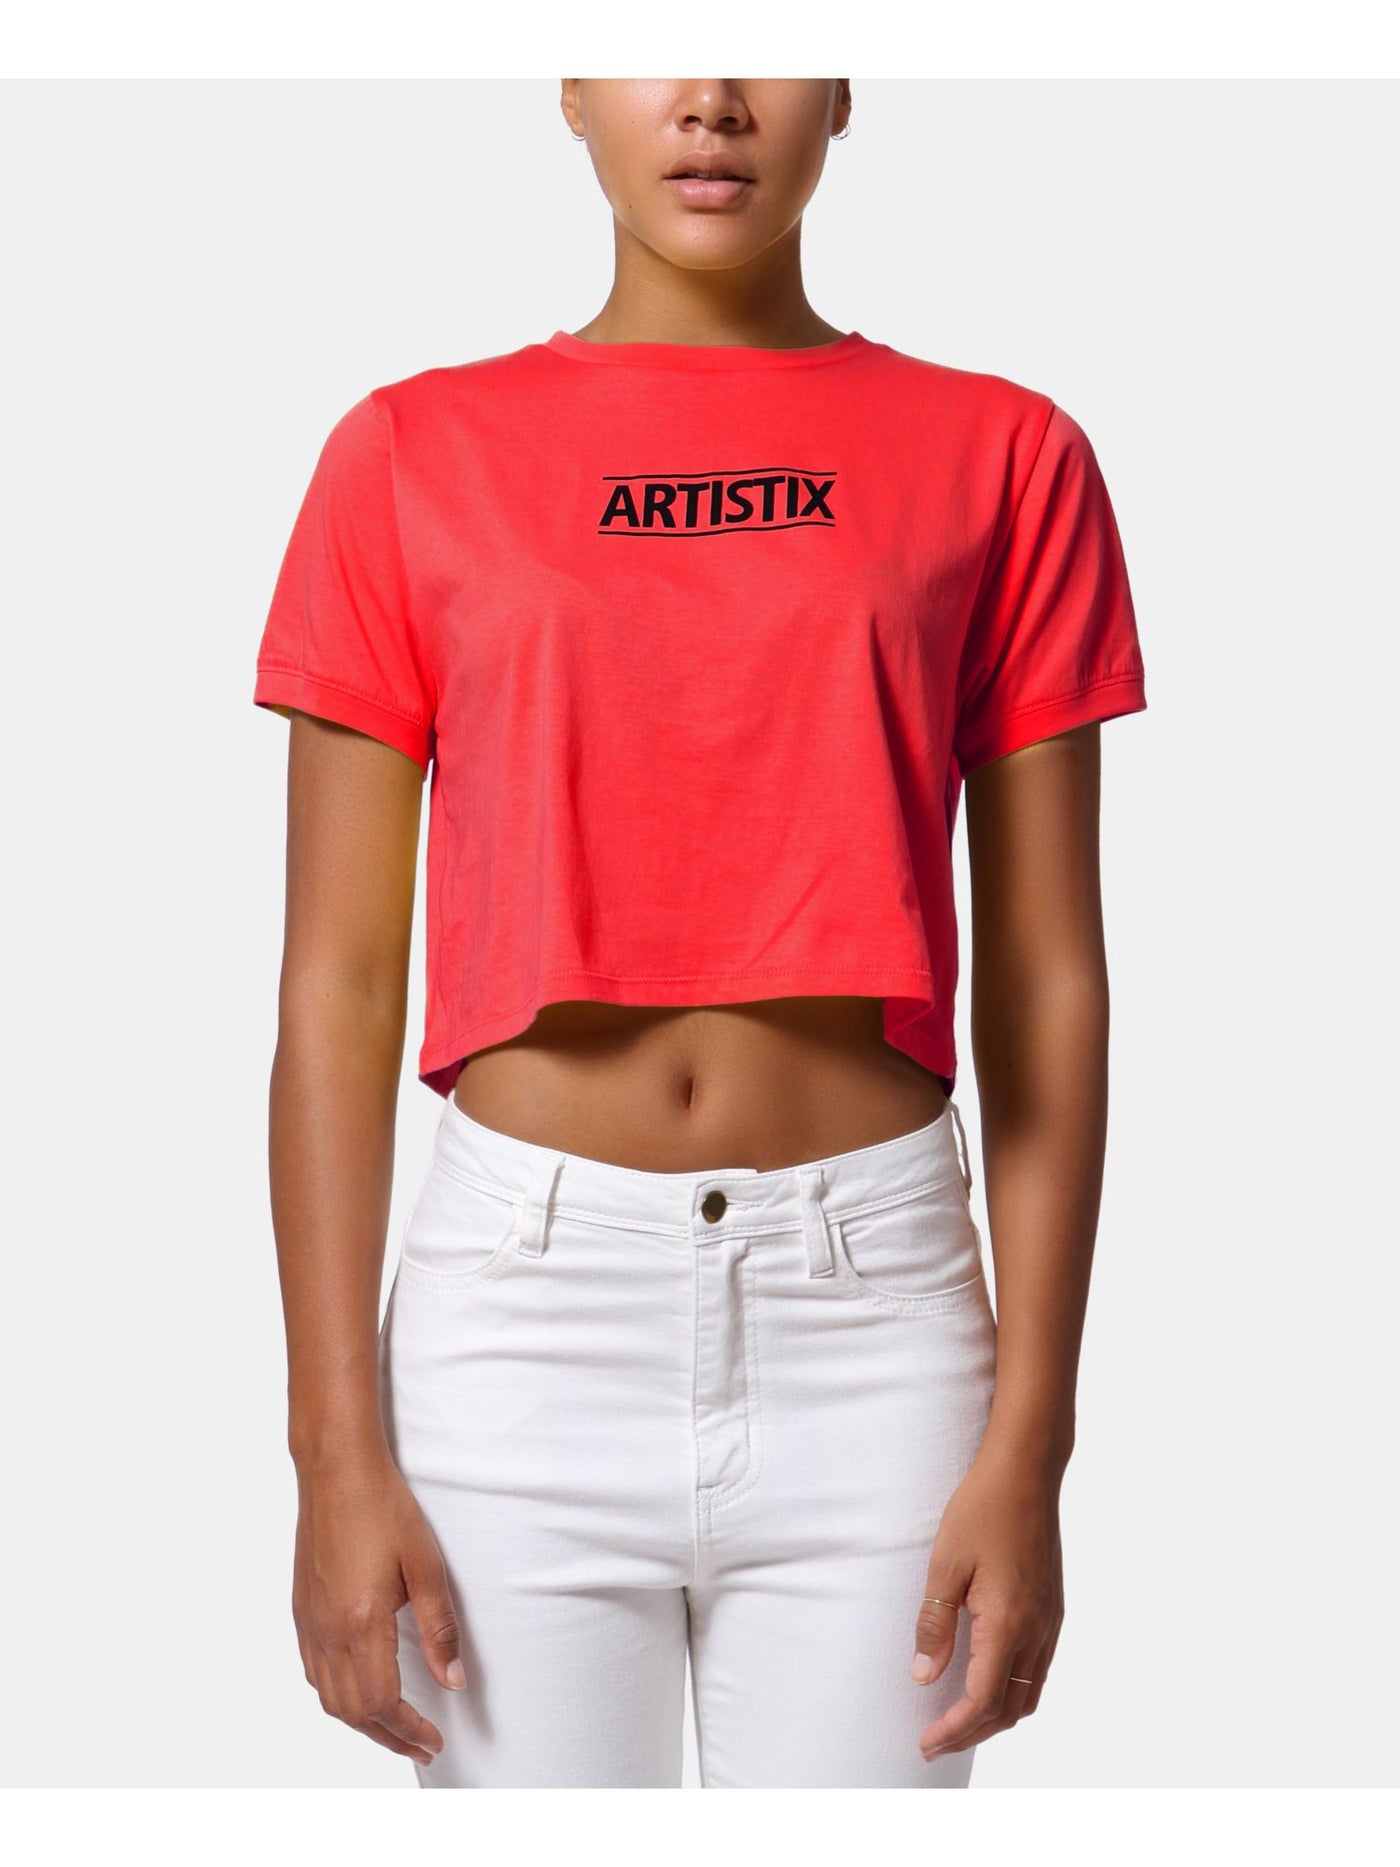 ARTISTIX Womens Red Logo Graphic Short Sleeve Jewel Neck Crop Top XS